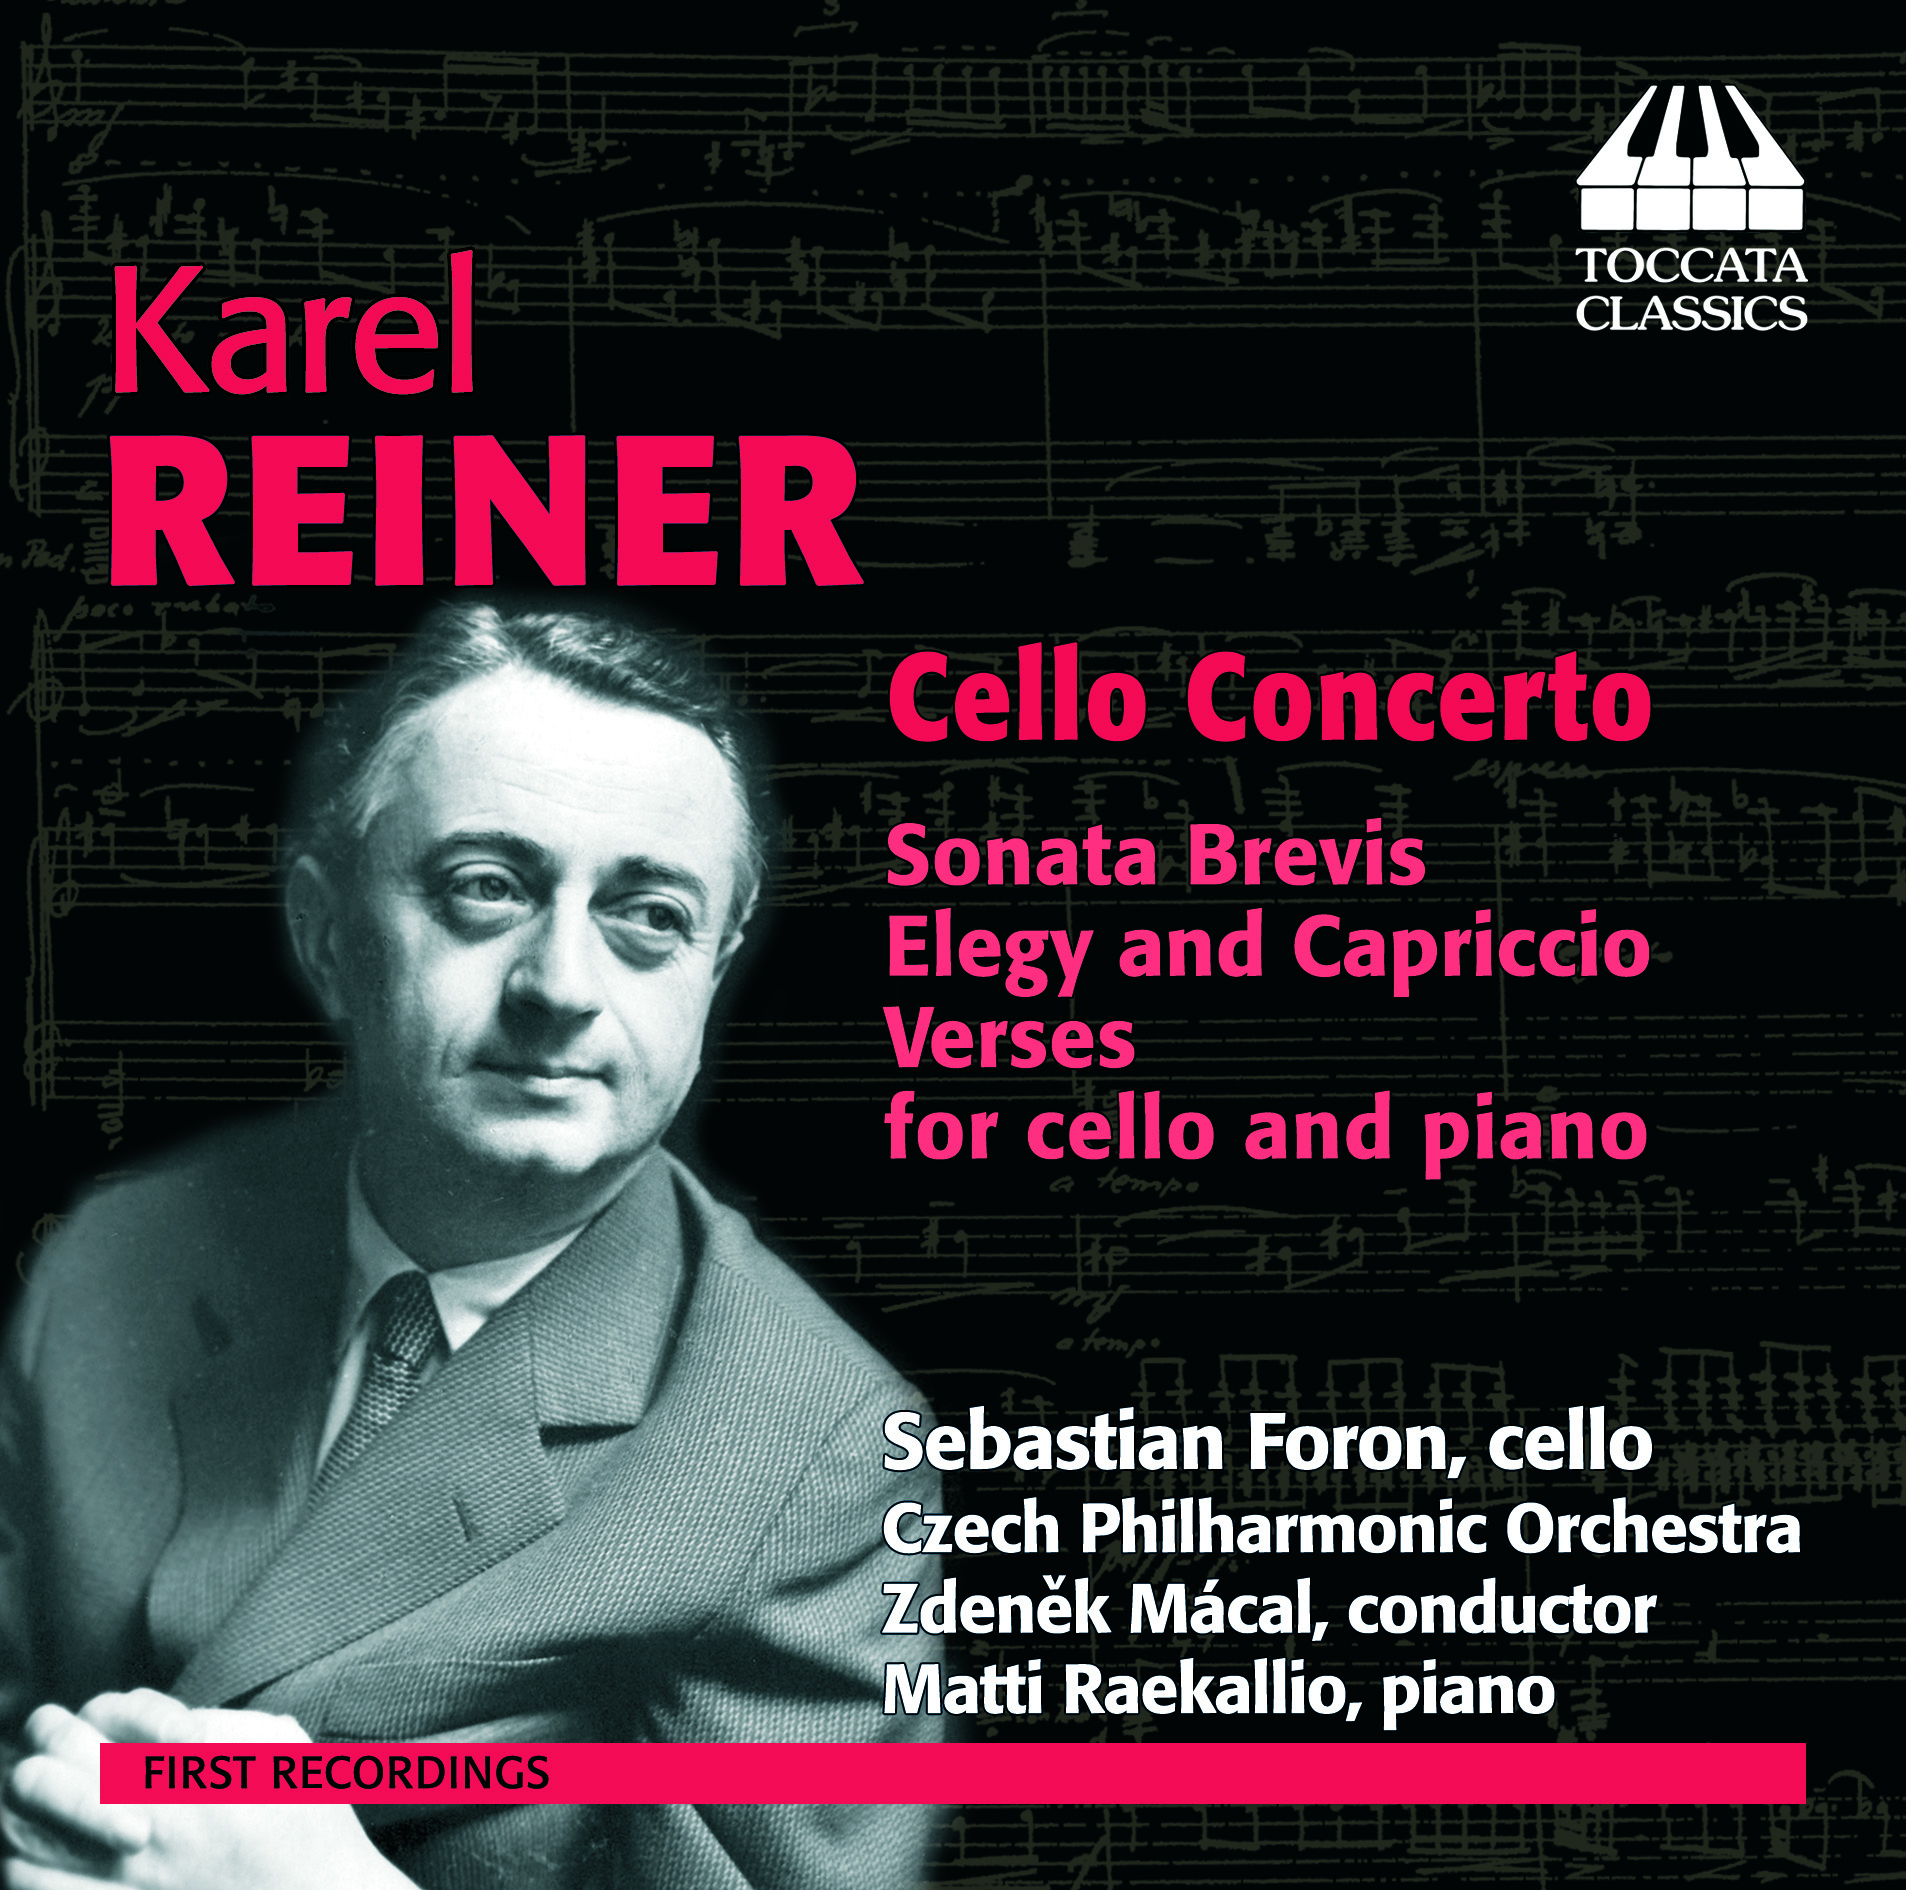 TOCC 0083 Reiner Cello Concerto